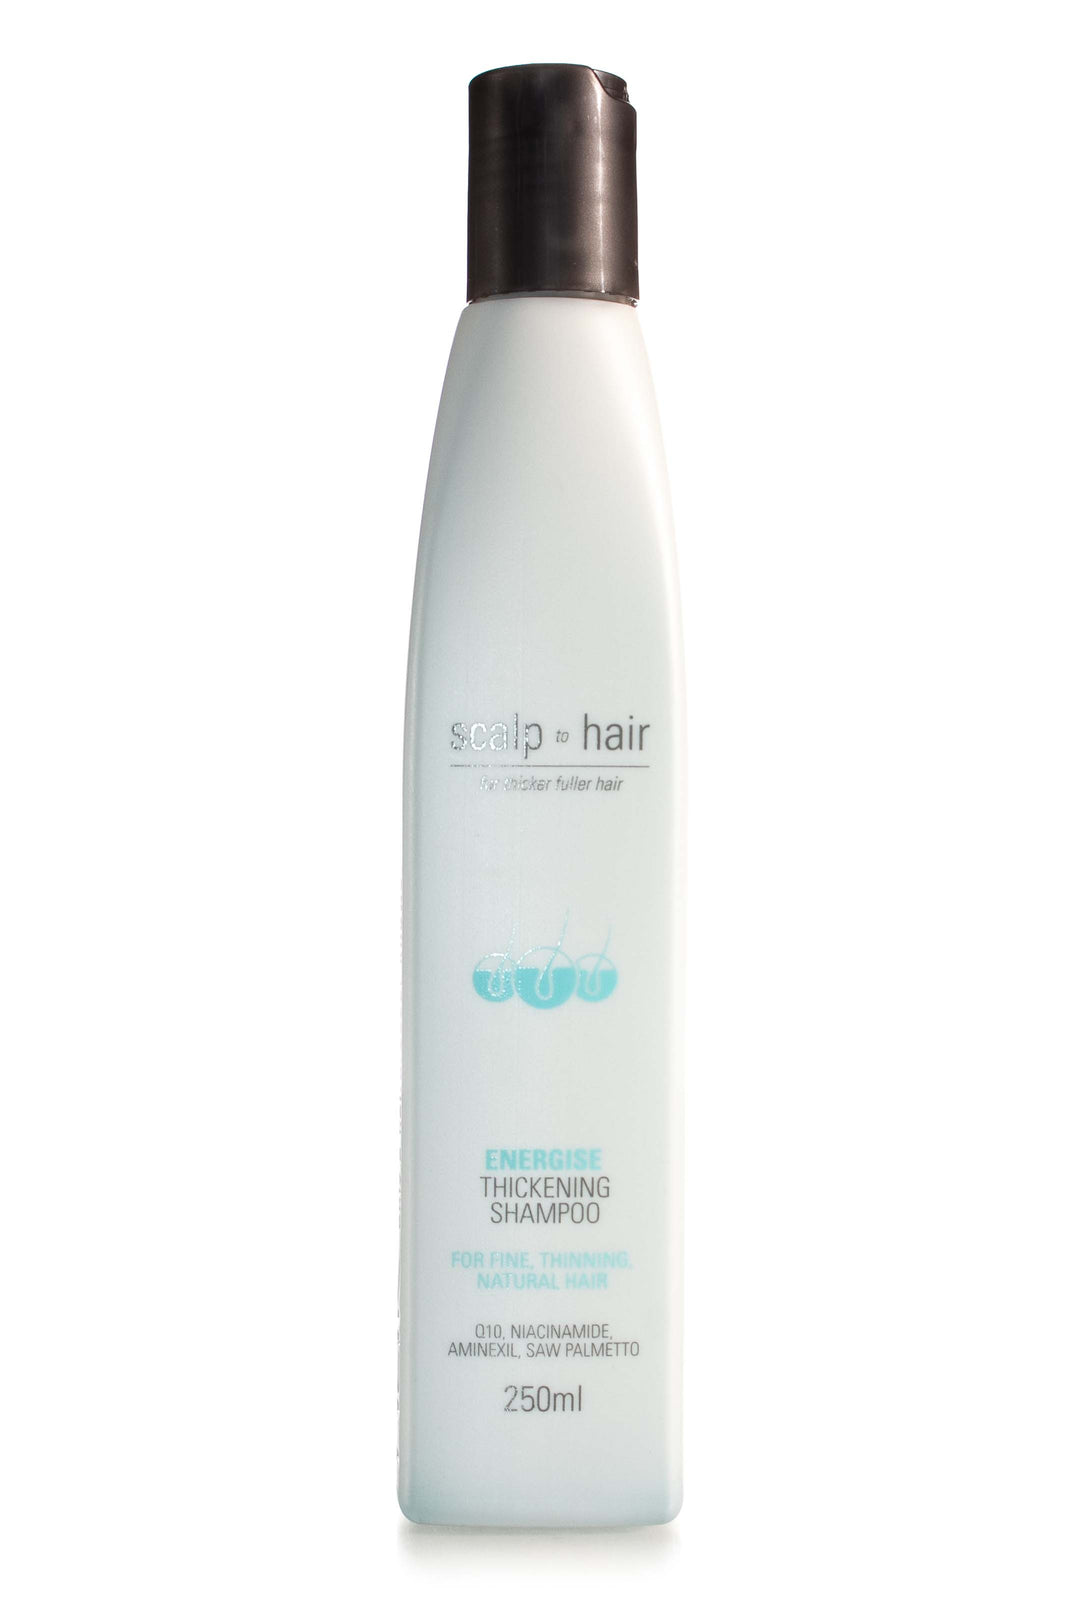 nak-hair-scalp-to-hair-energise-thickening-shampoo-250ml